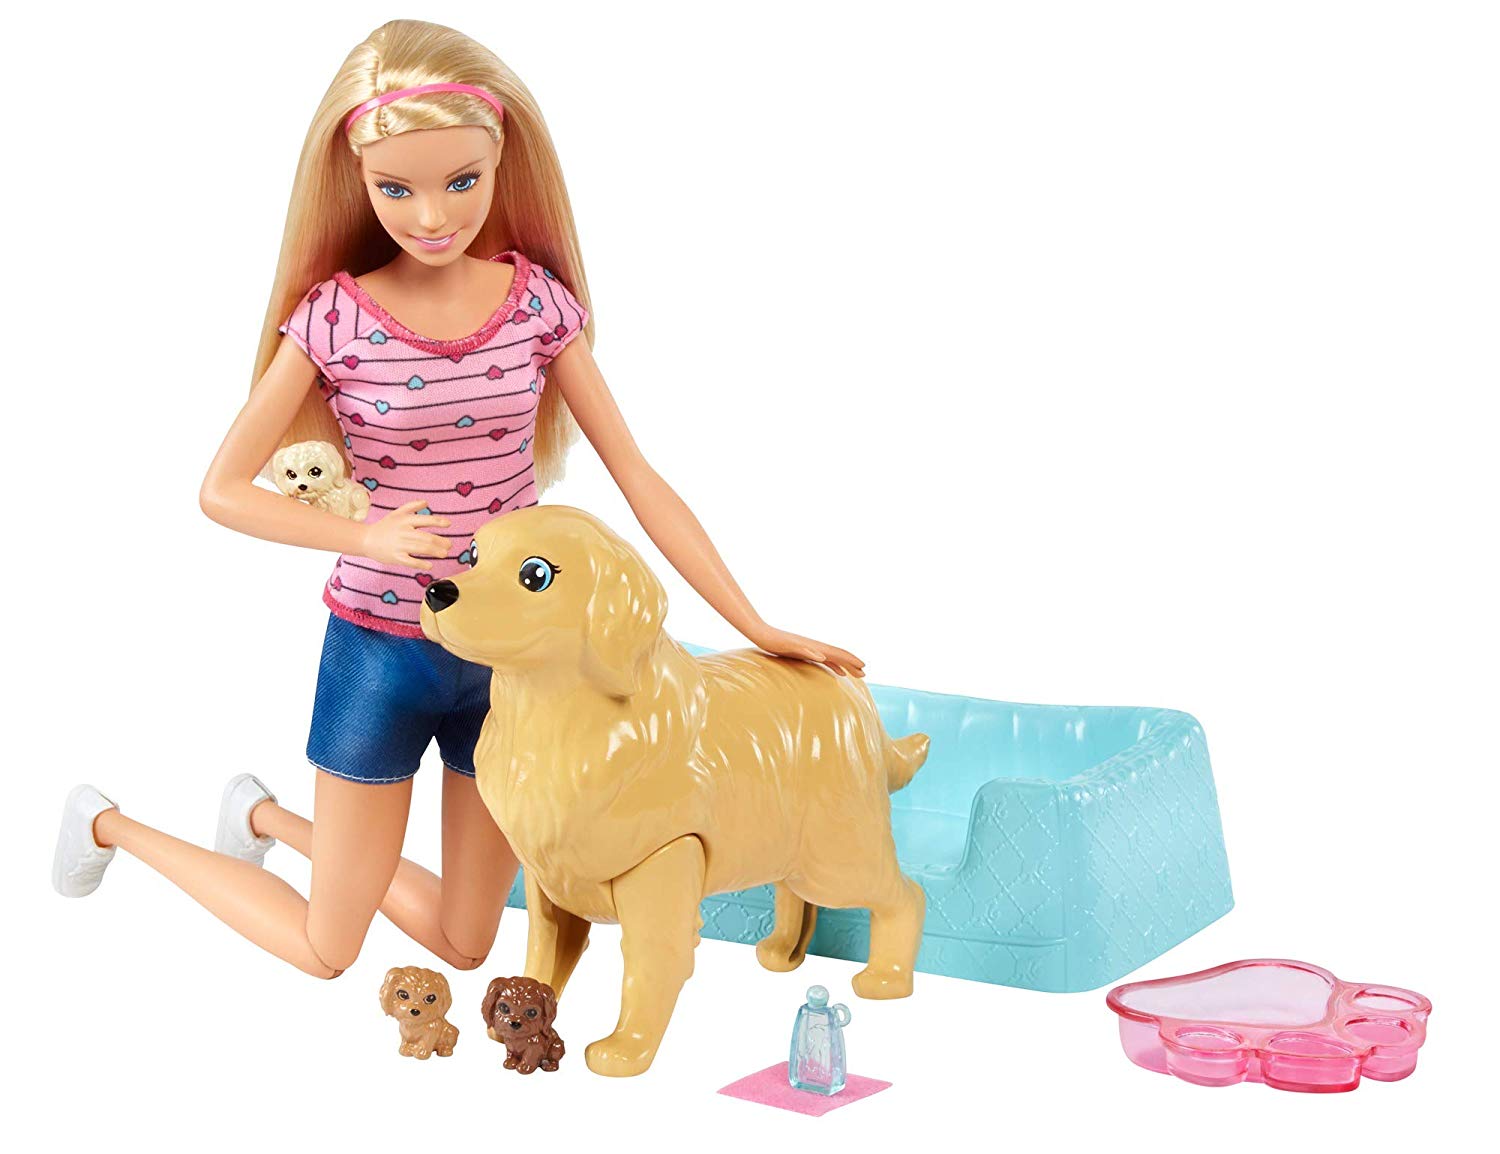 Barbie And Ken Gender Reveal | lupon.gov.ph